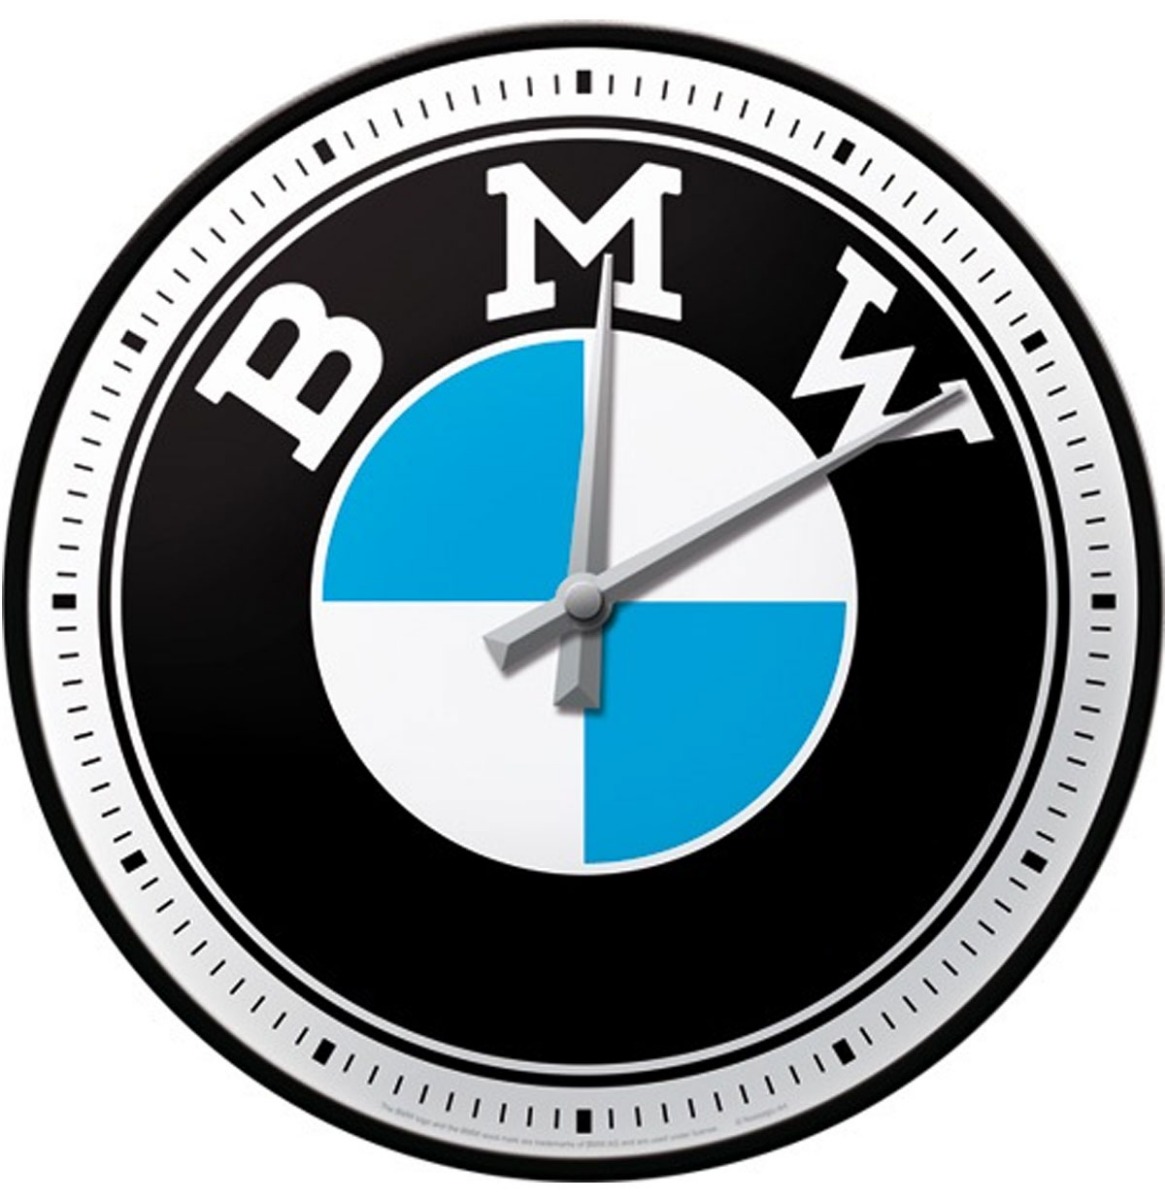 Wandklok BMW Logo